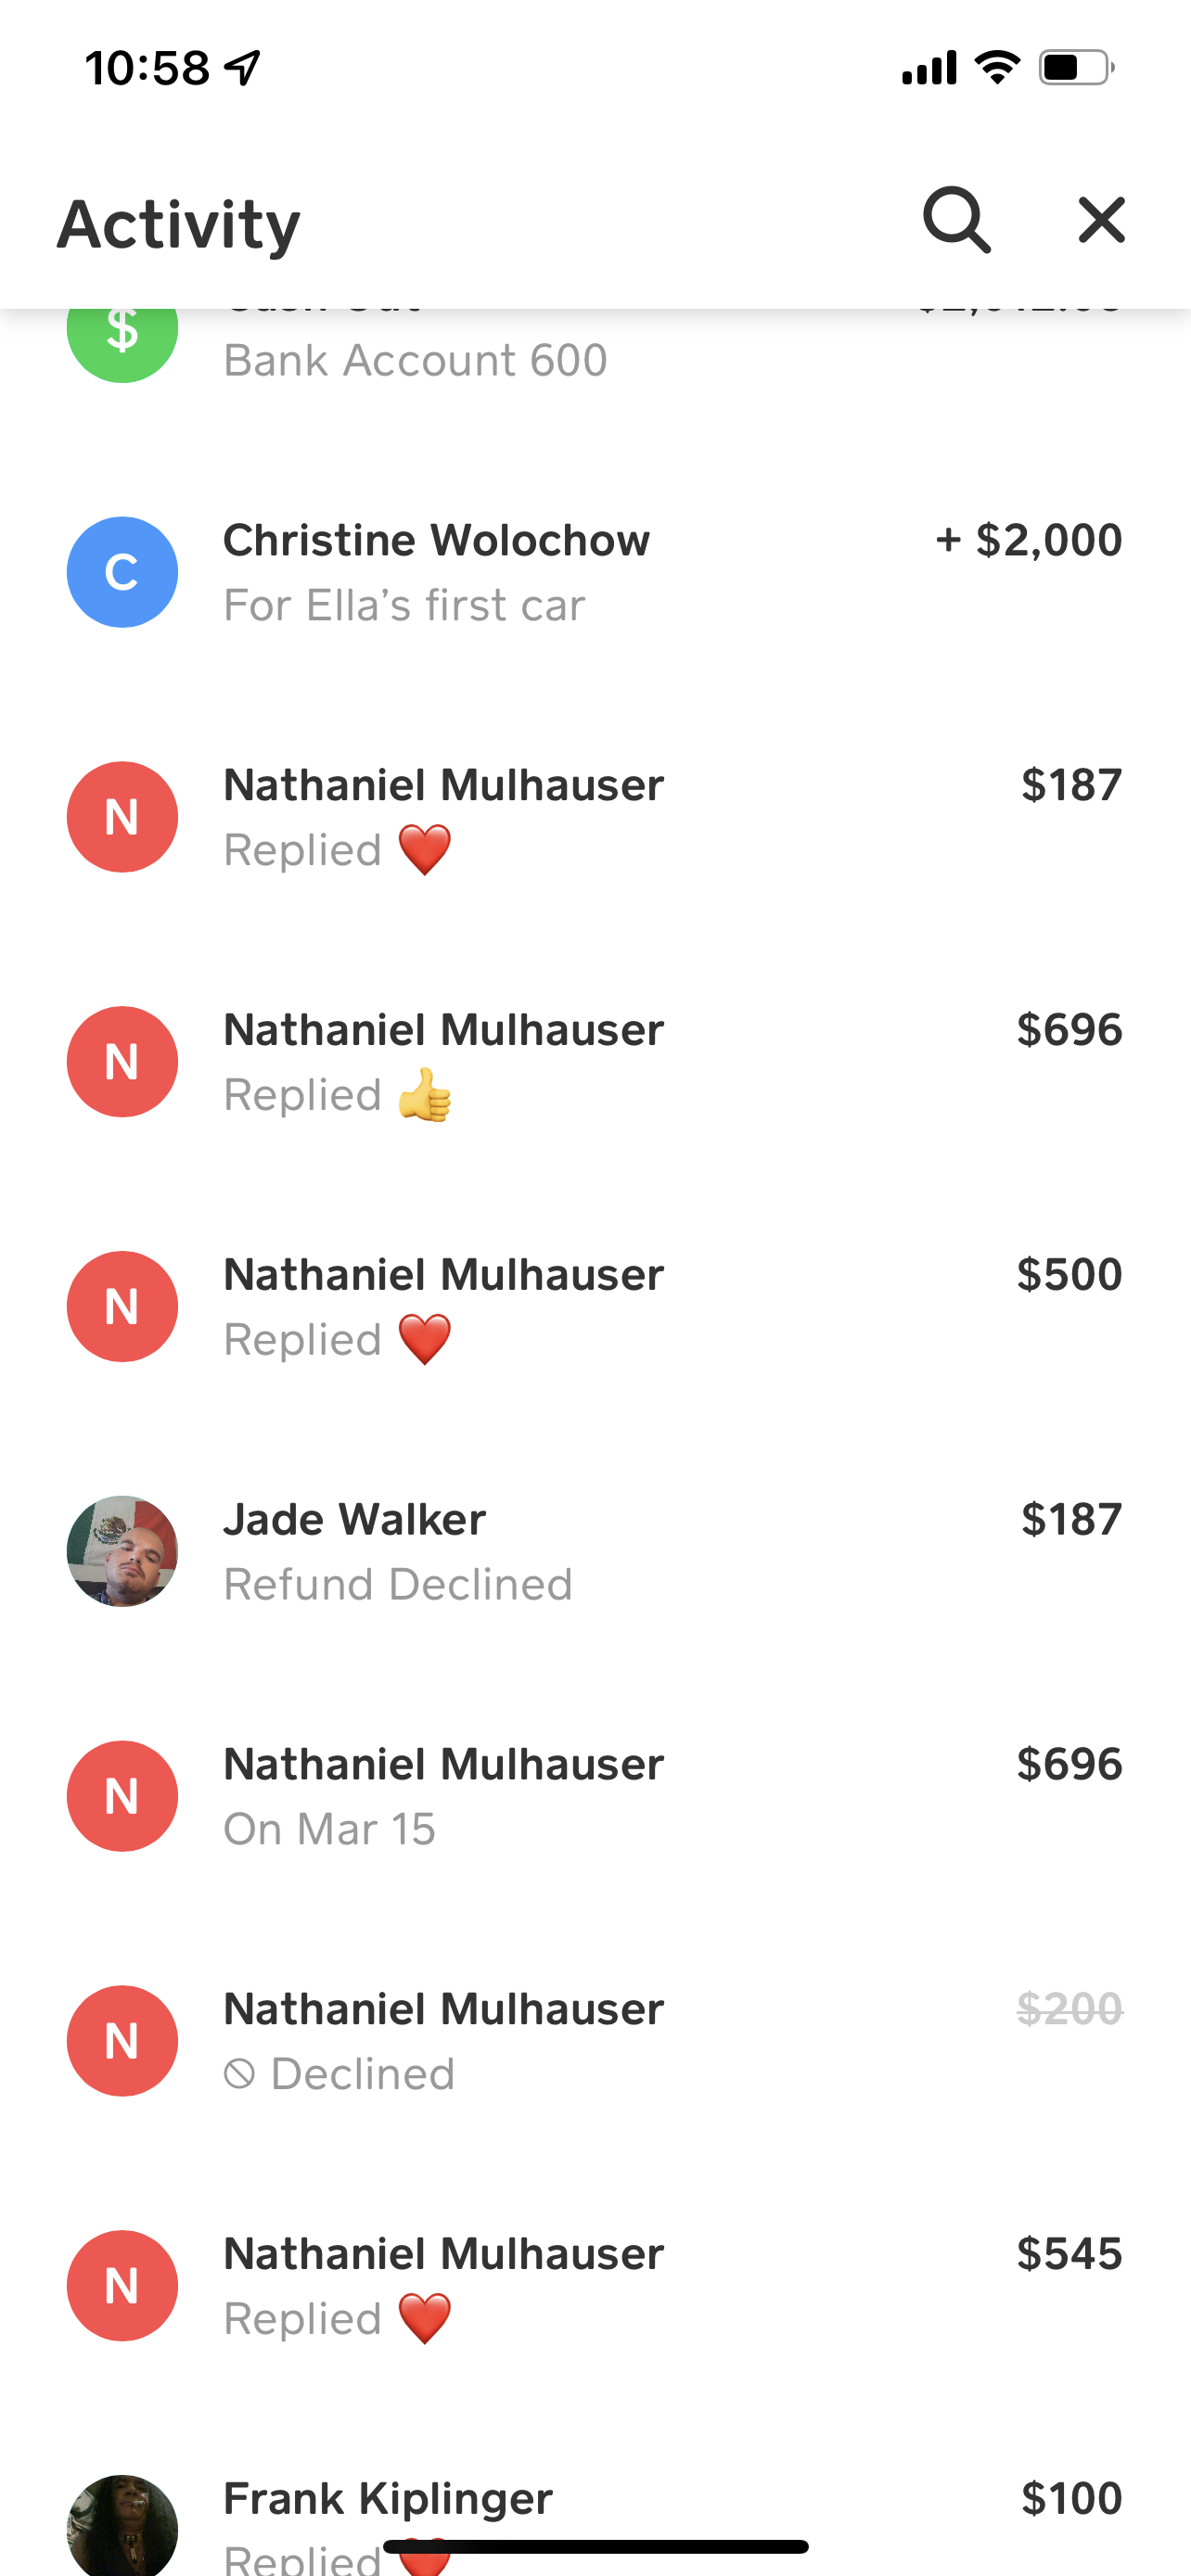 Jade walker unclaimed  doc from cash app